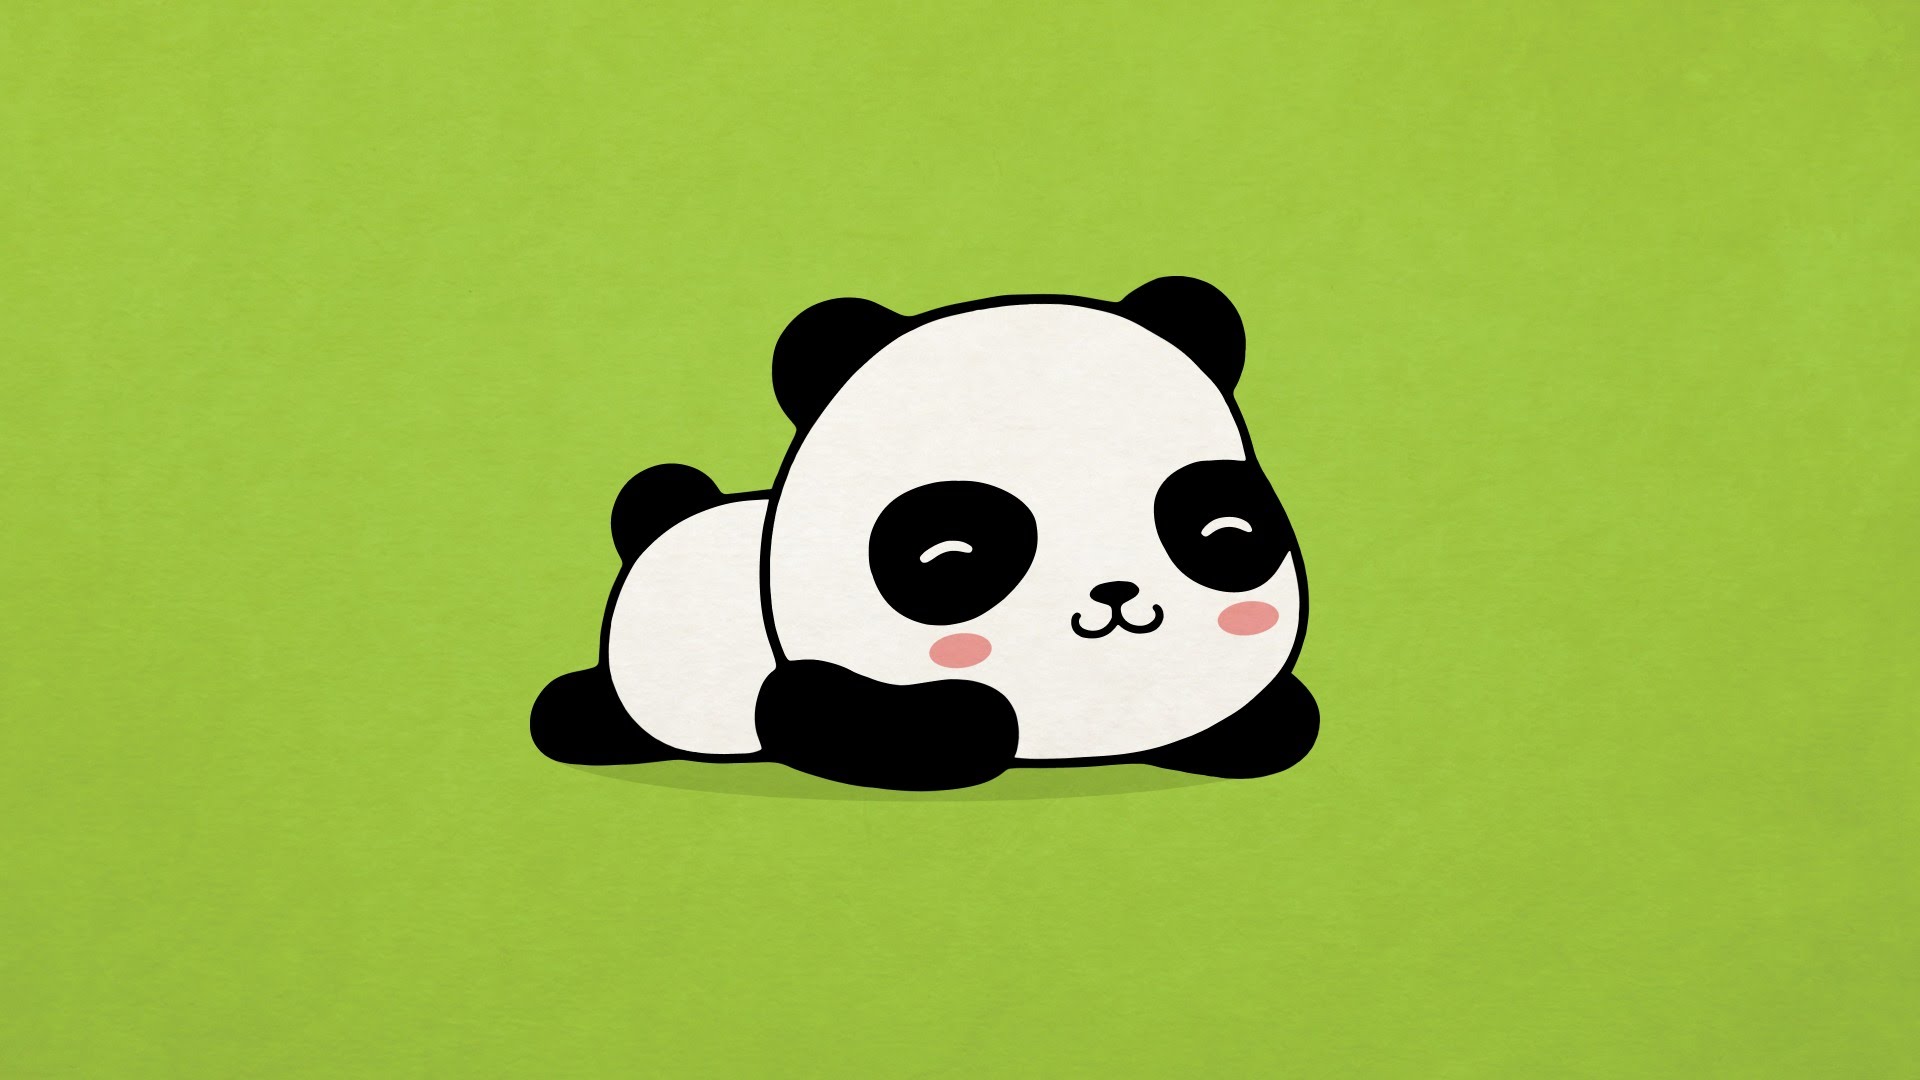 A Very Cute Cartoon Panda - ClipArt Best